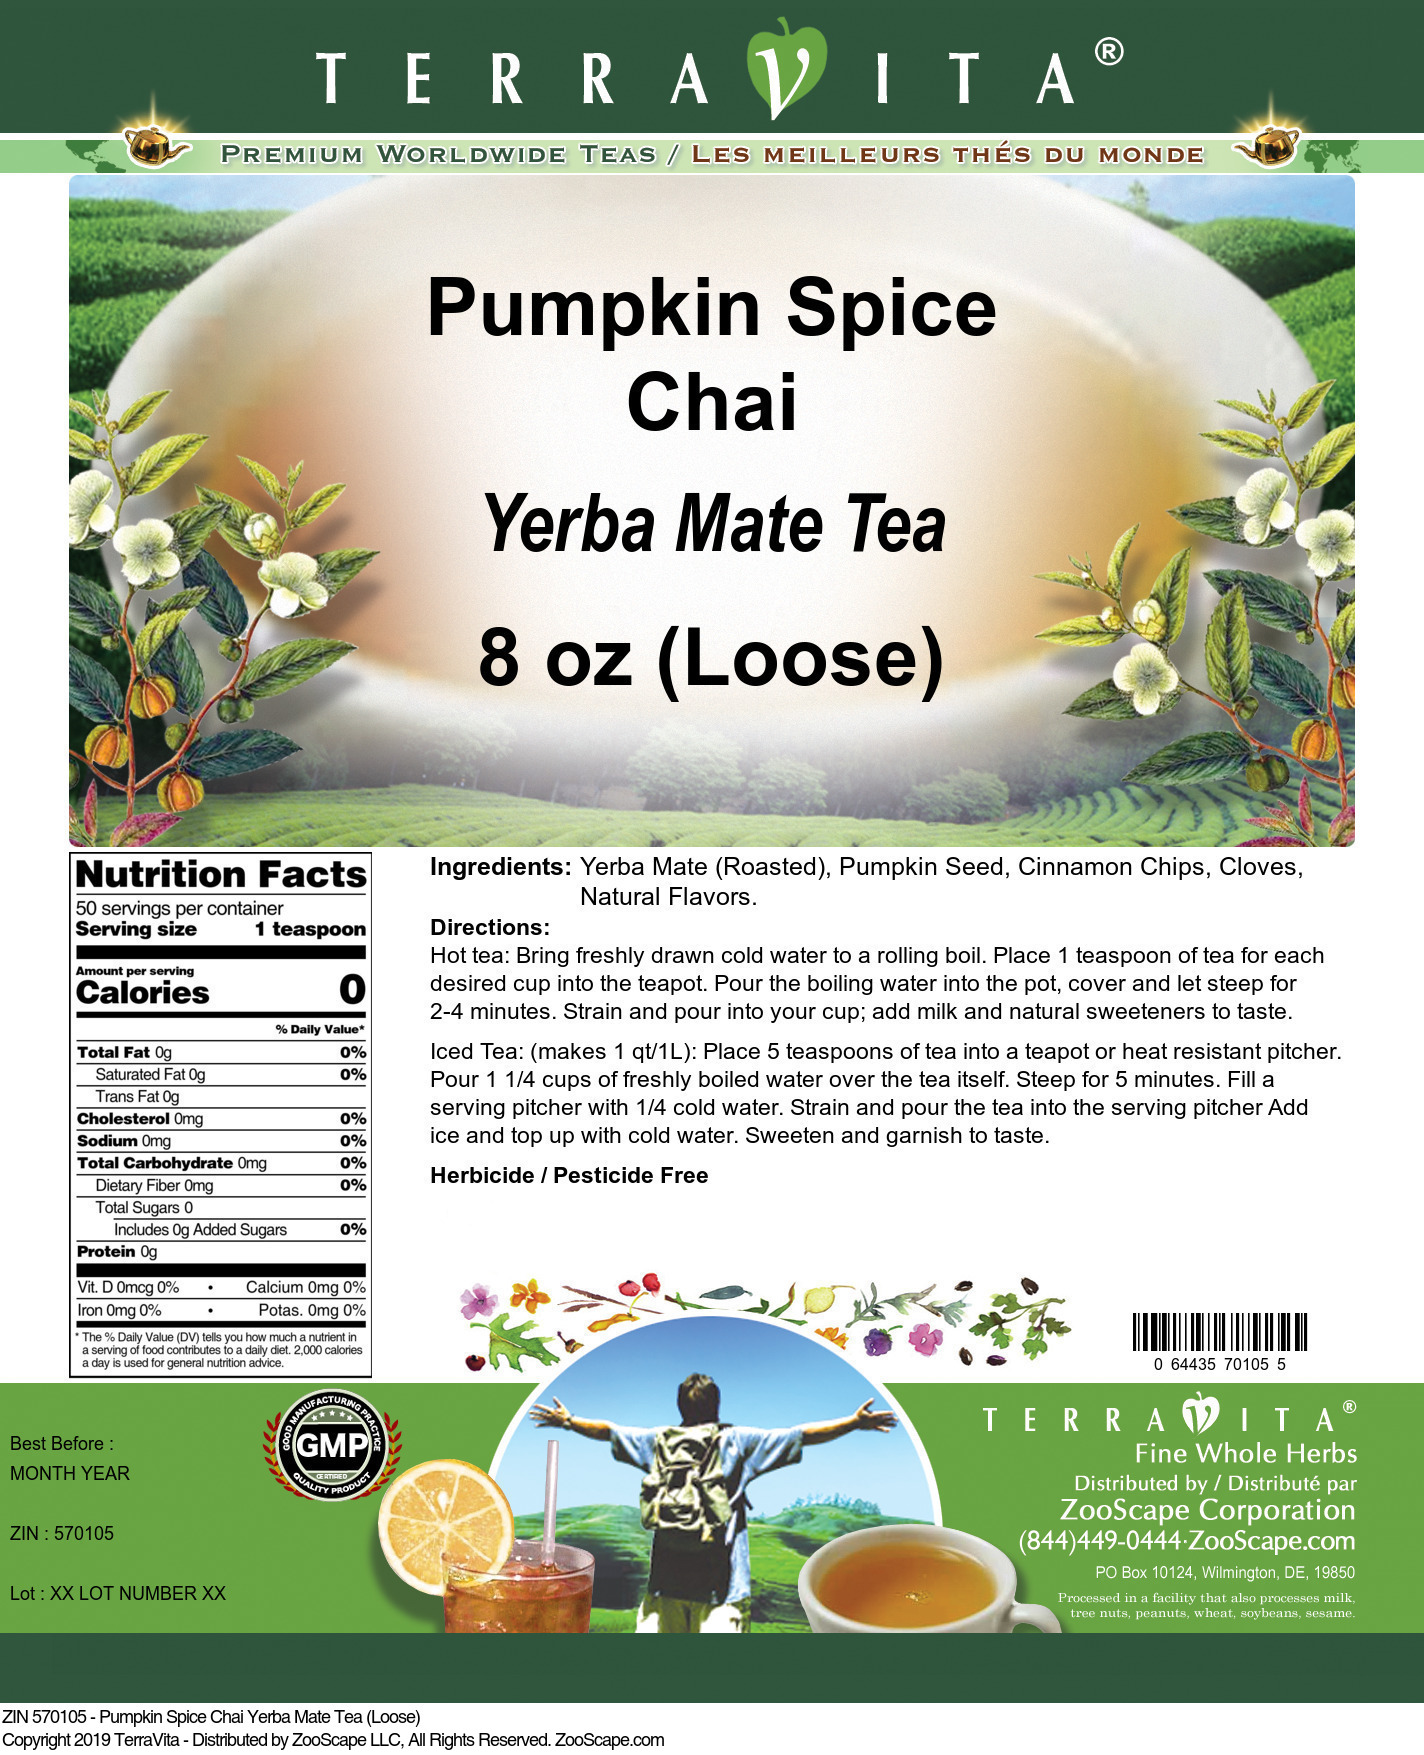 Pumpkin Spice Chai Yerba Mate Tea (Loose) - Label